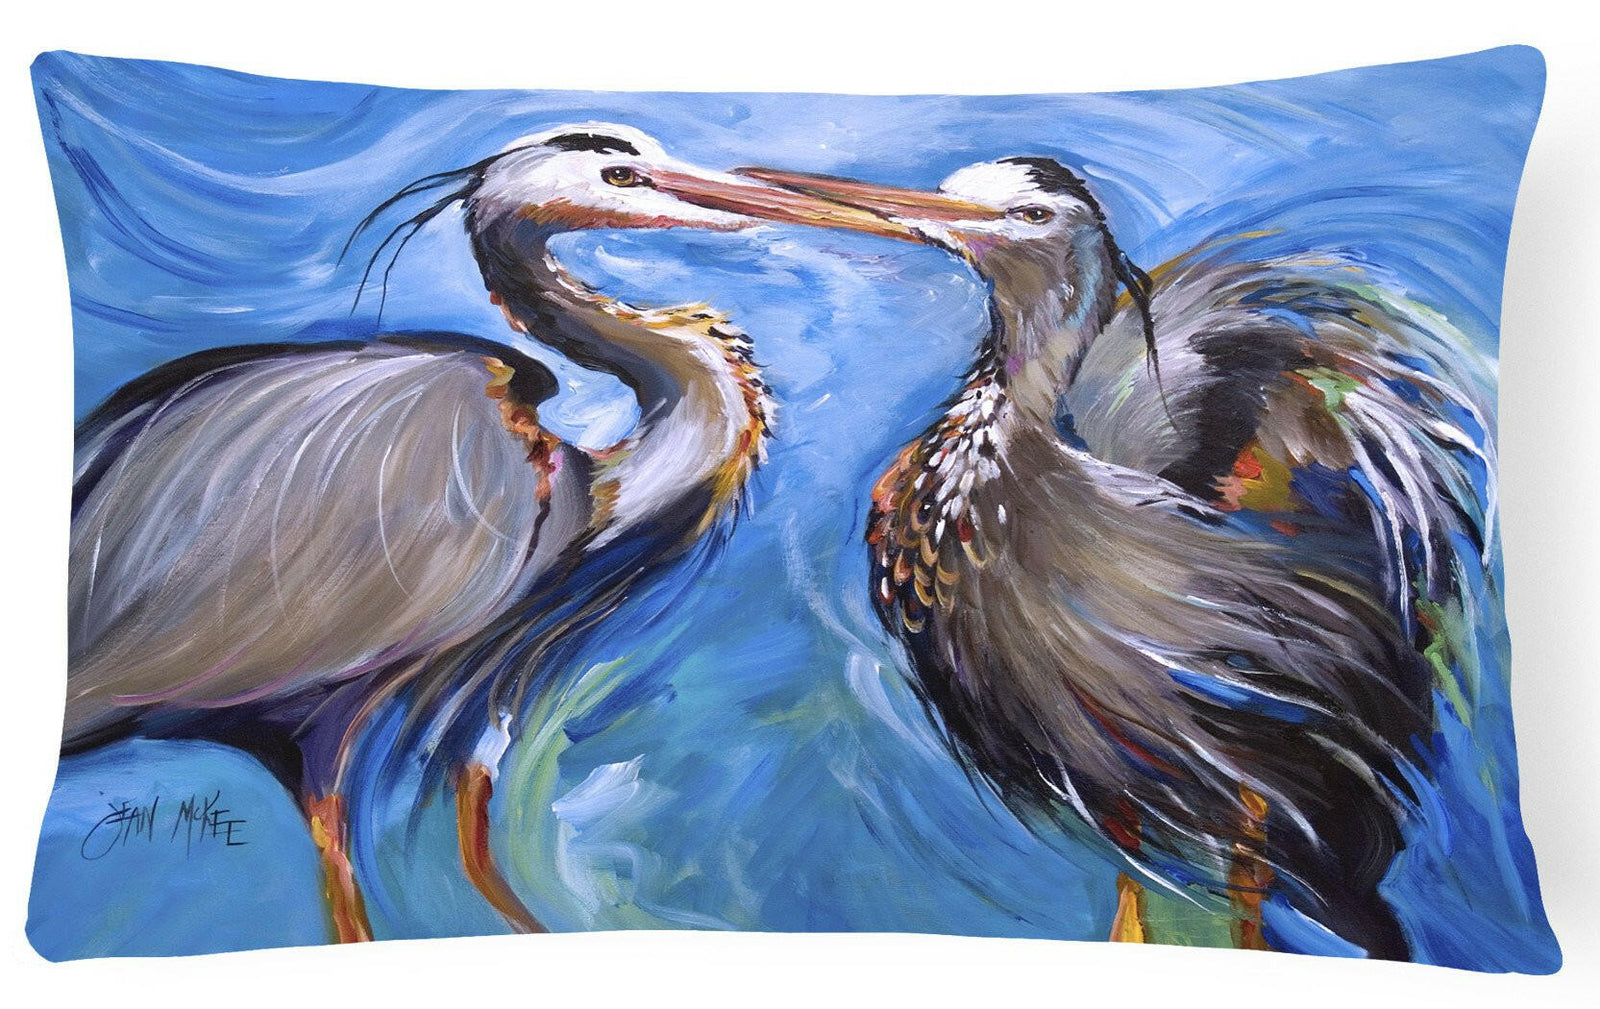 Blue Heron Love Canvas Fabric Decorative Pillow JMK1011PW1216 by Caroline's Treasures